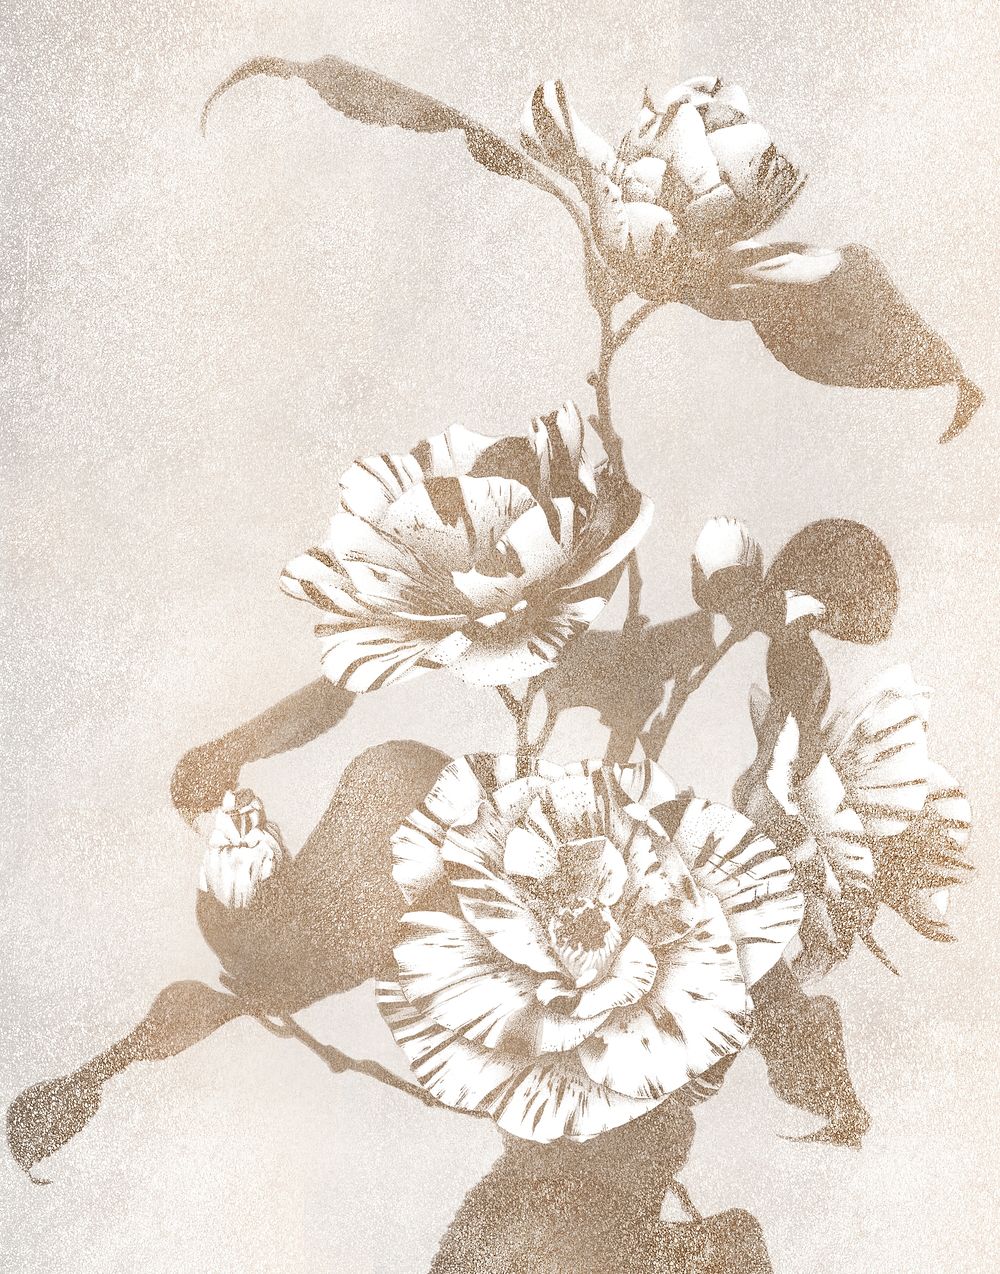 Sepia striped Camellias vintage illustration artwork, remix from orginal photography.